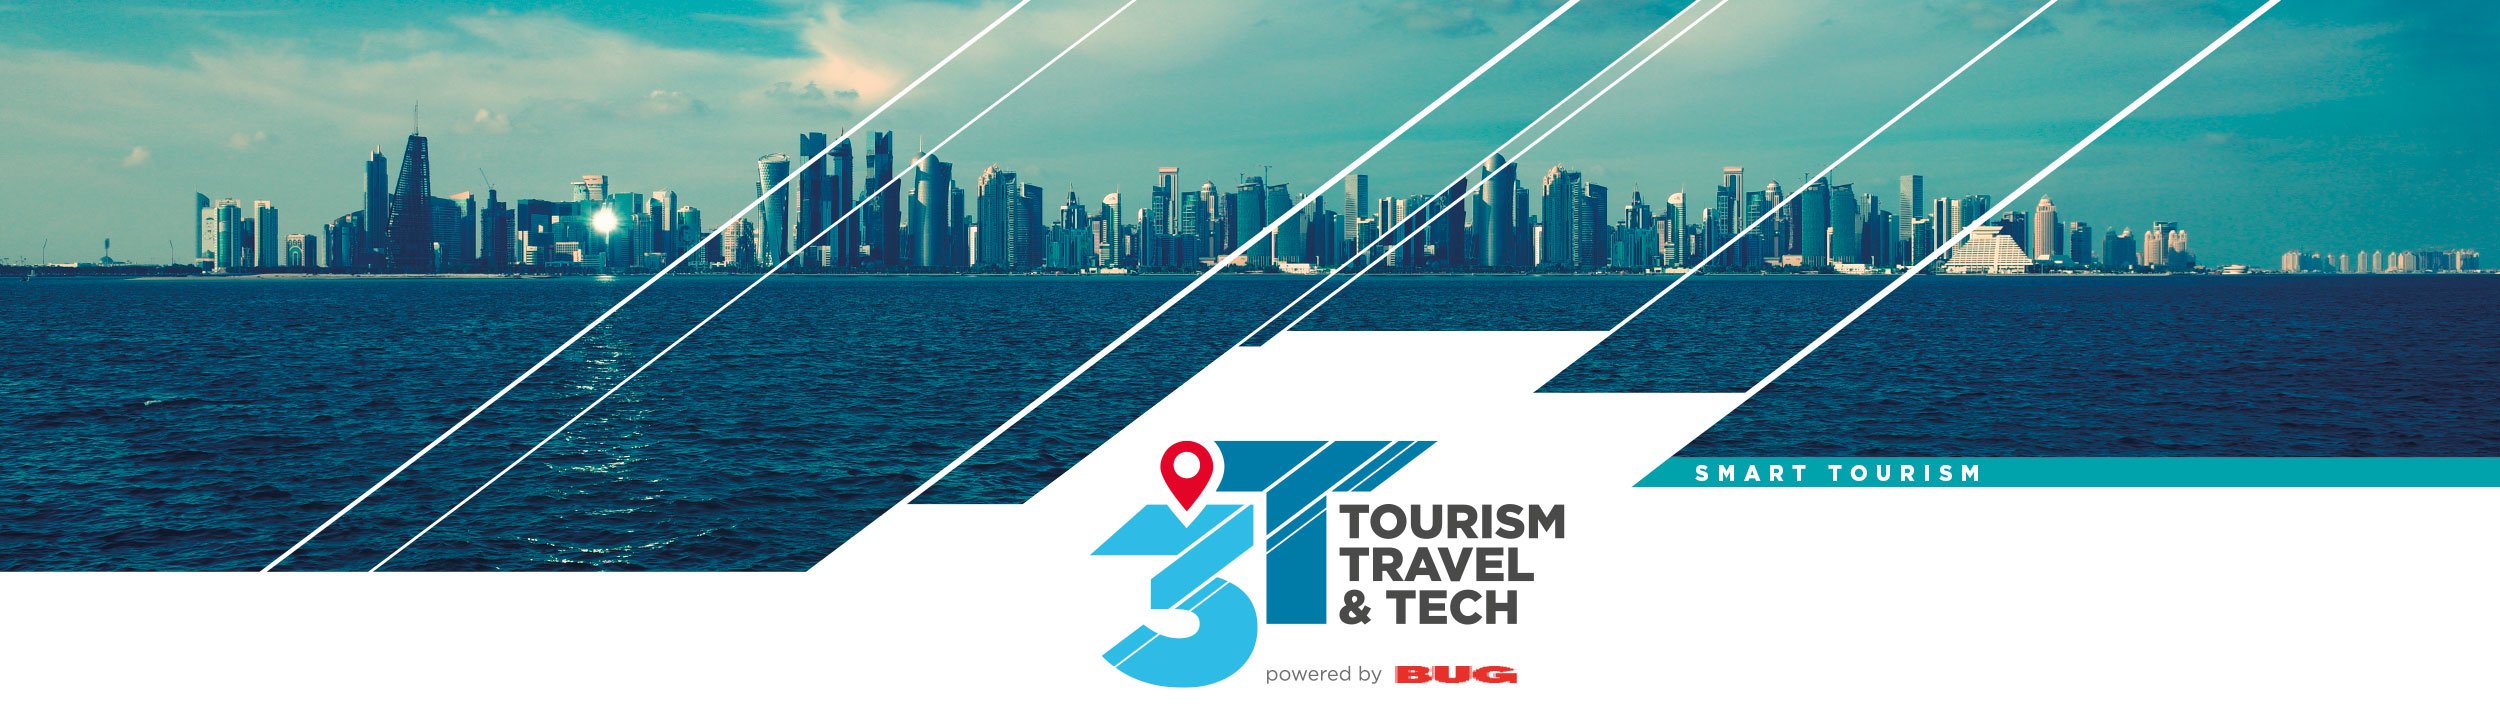 3T - Tourism, Travel & Tech